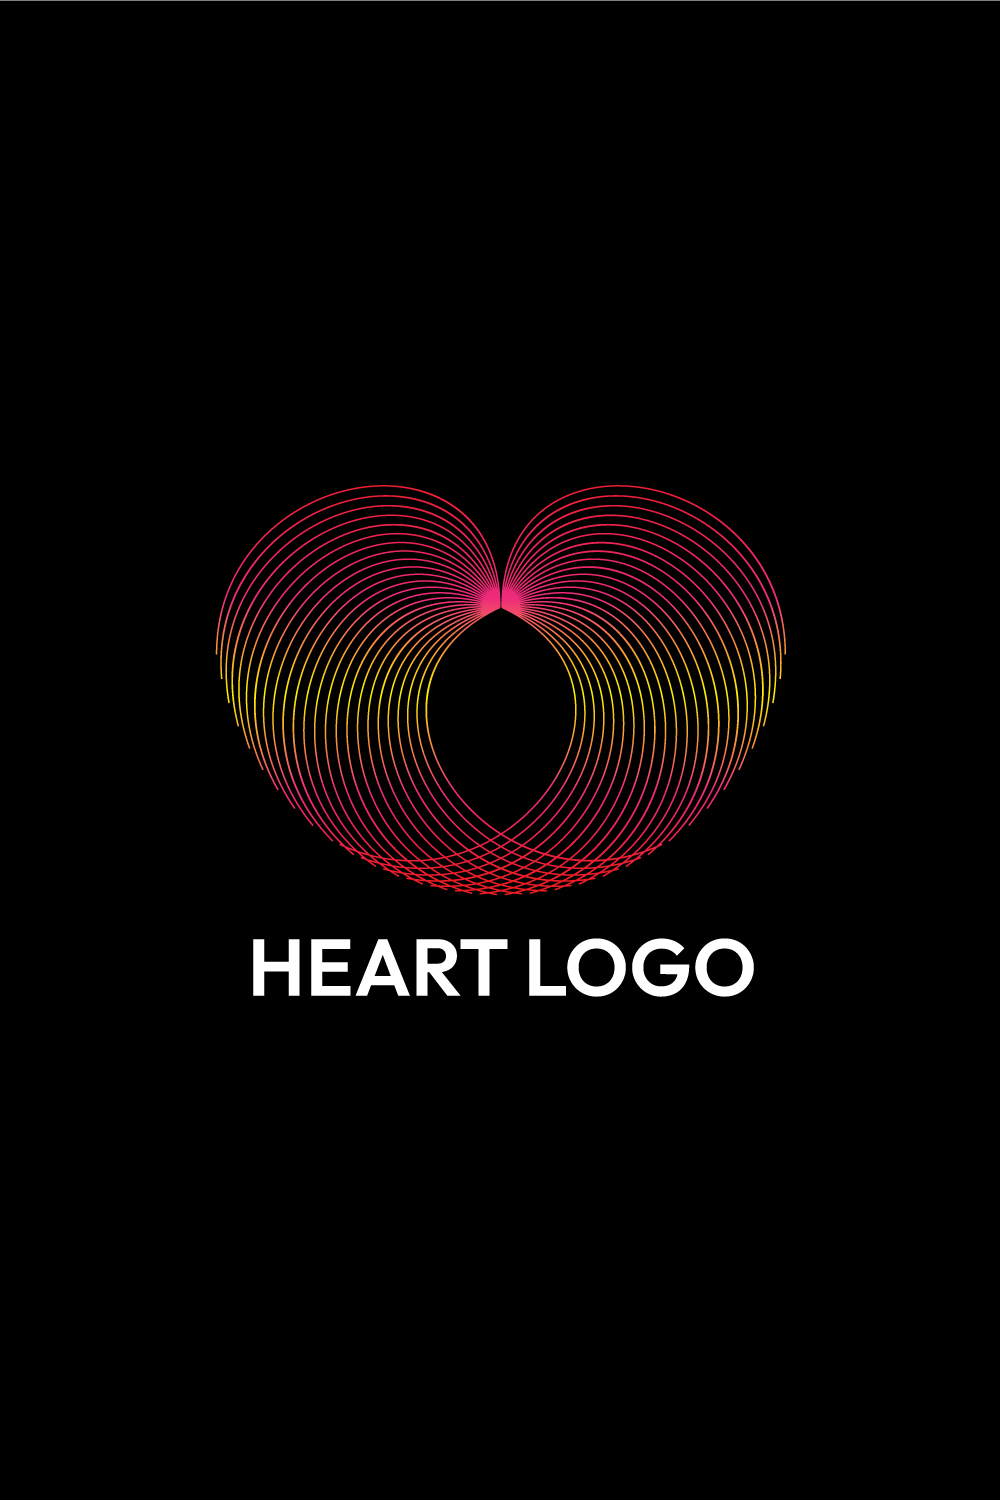 Elegant Line Art Heart: Love and Beauty Logo Design Bundle pinterest preview image.